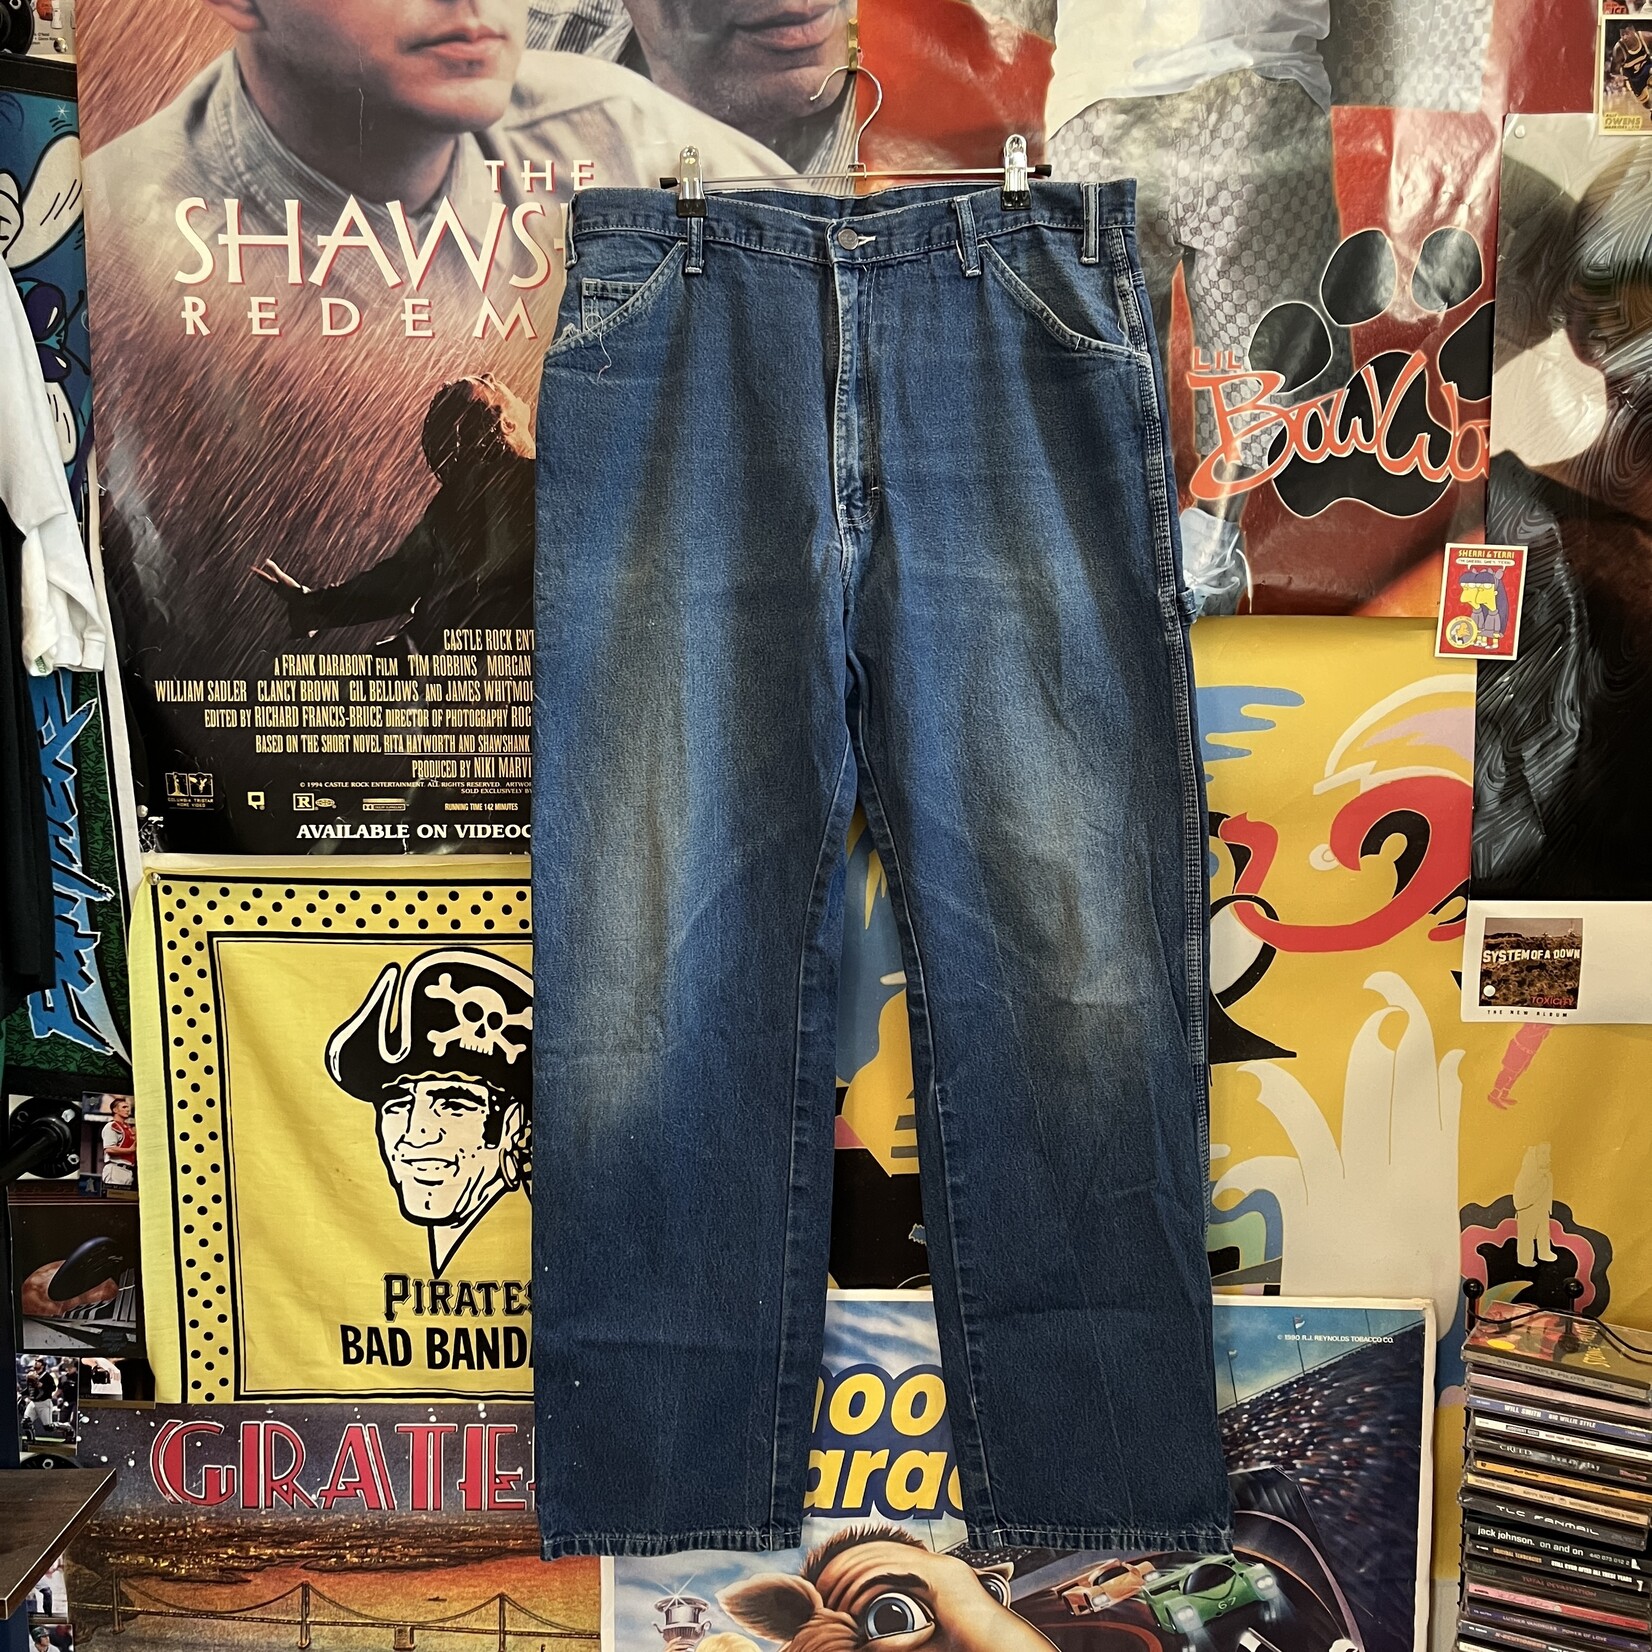 13726	dickies jeans sz. 36 x 32